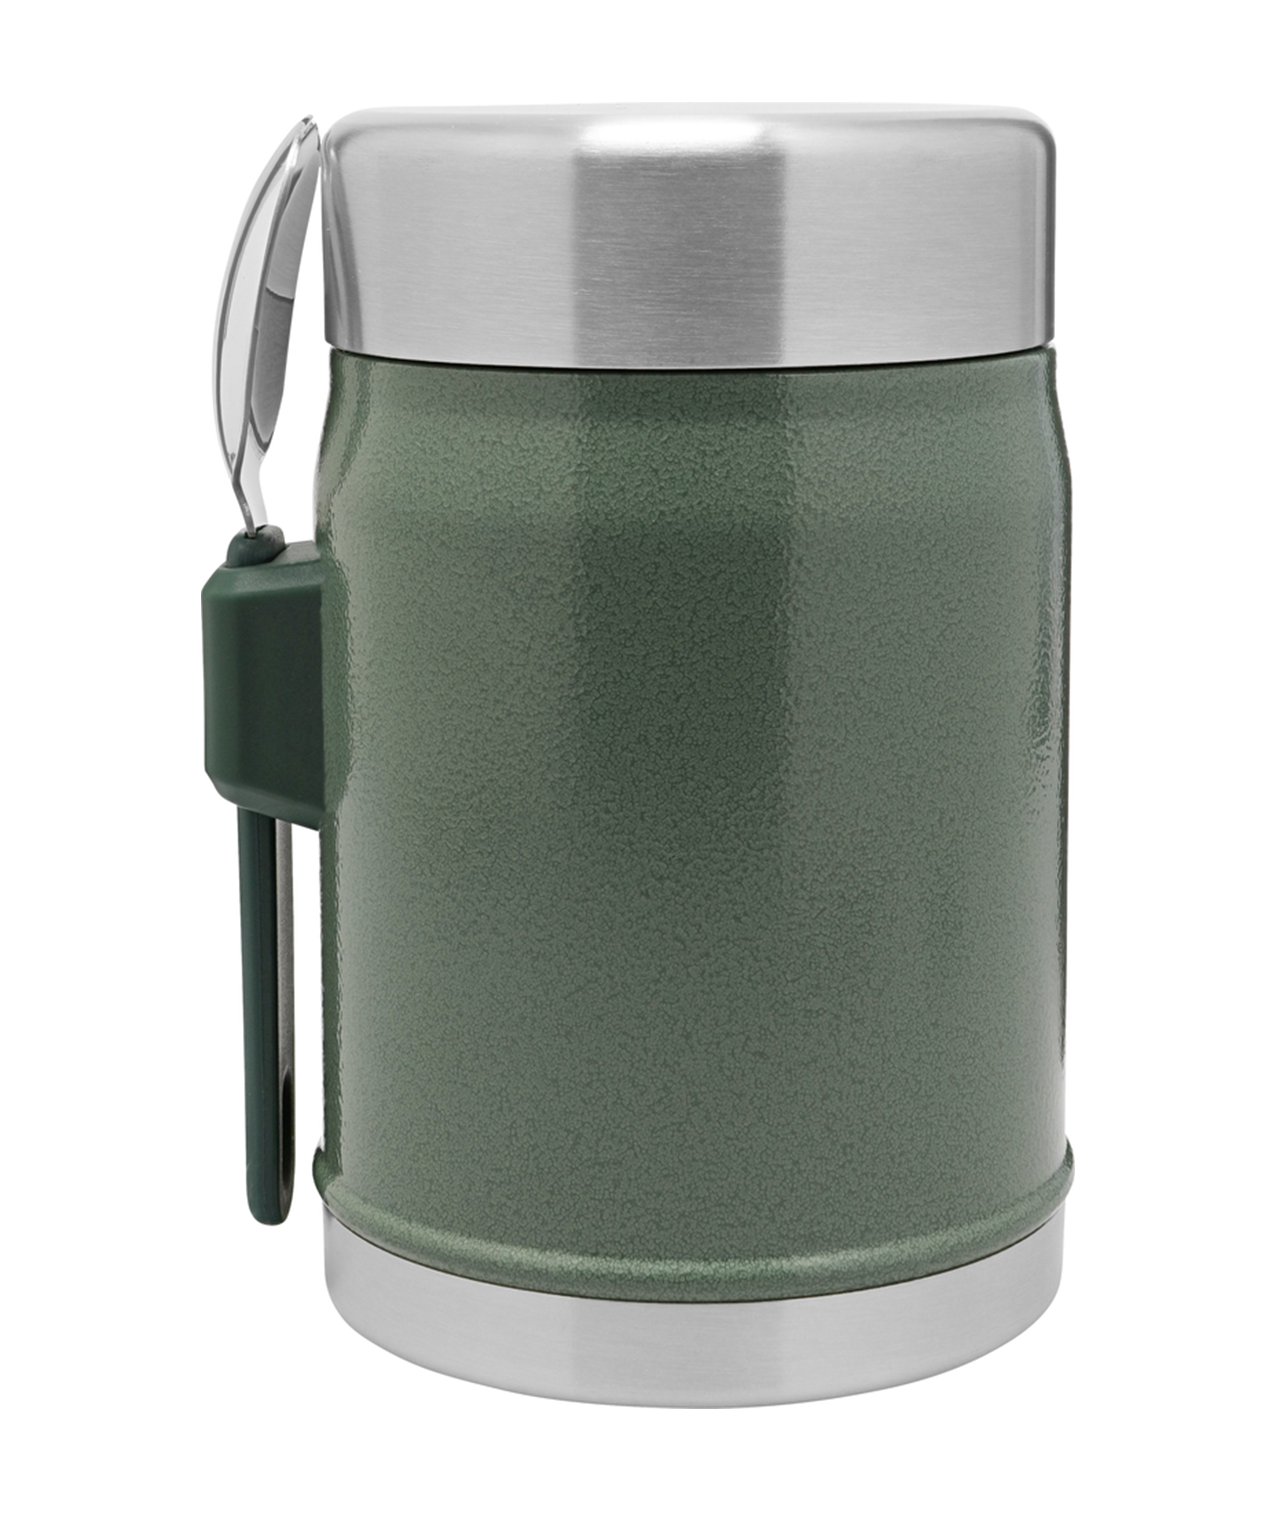 Vaccum food jar Stanley Classic 0,4 l green